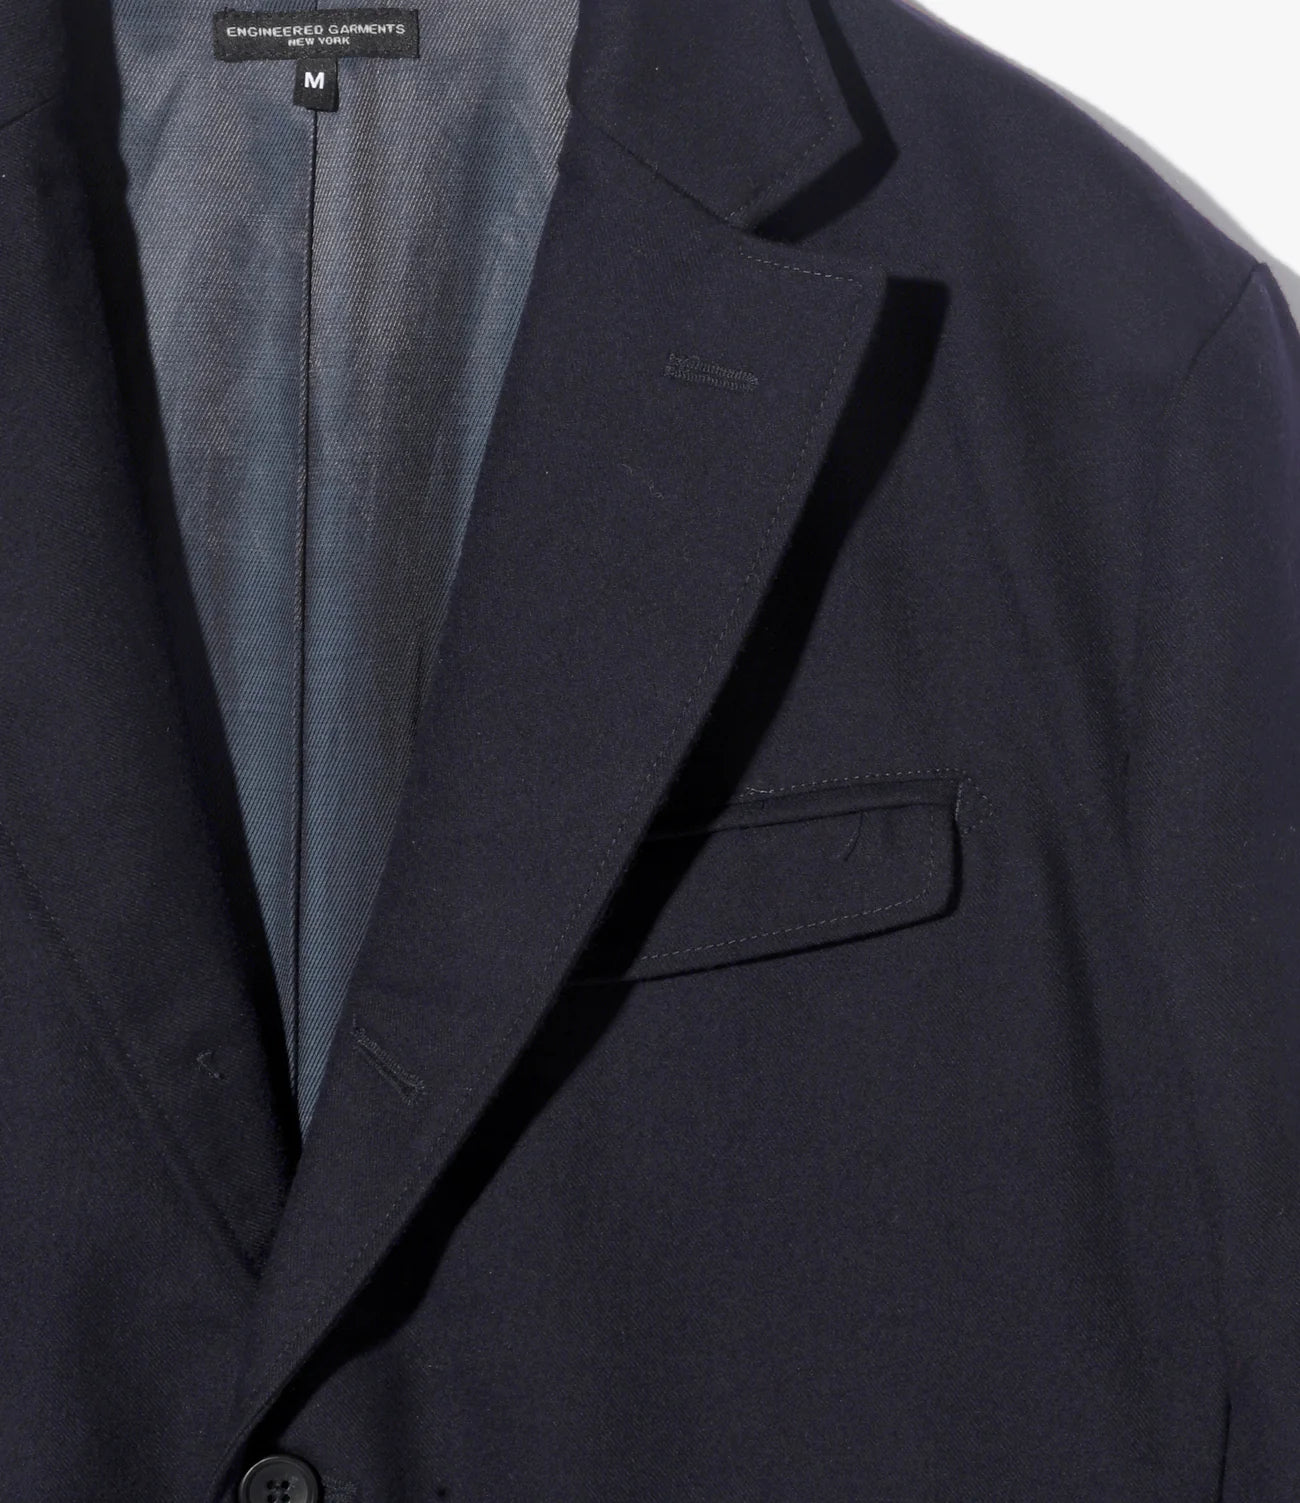 Engineered Garments Andover Jacket - Wool Uniform Serge